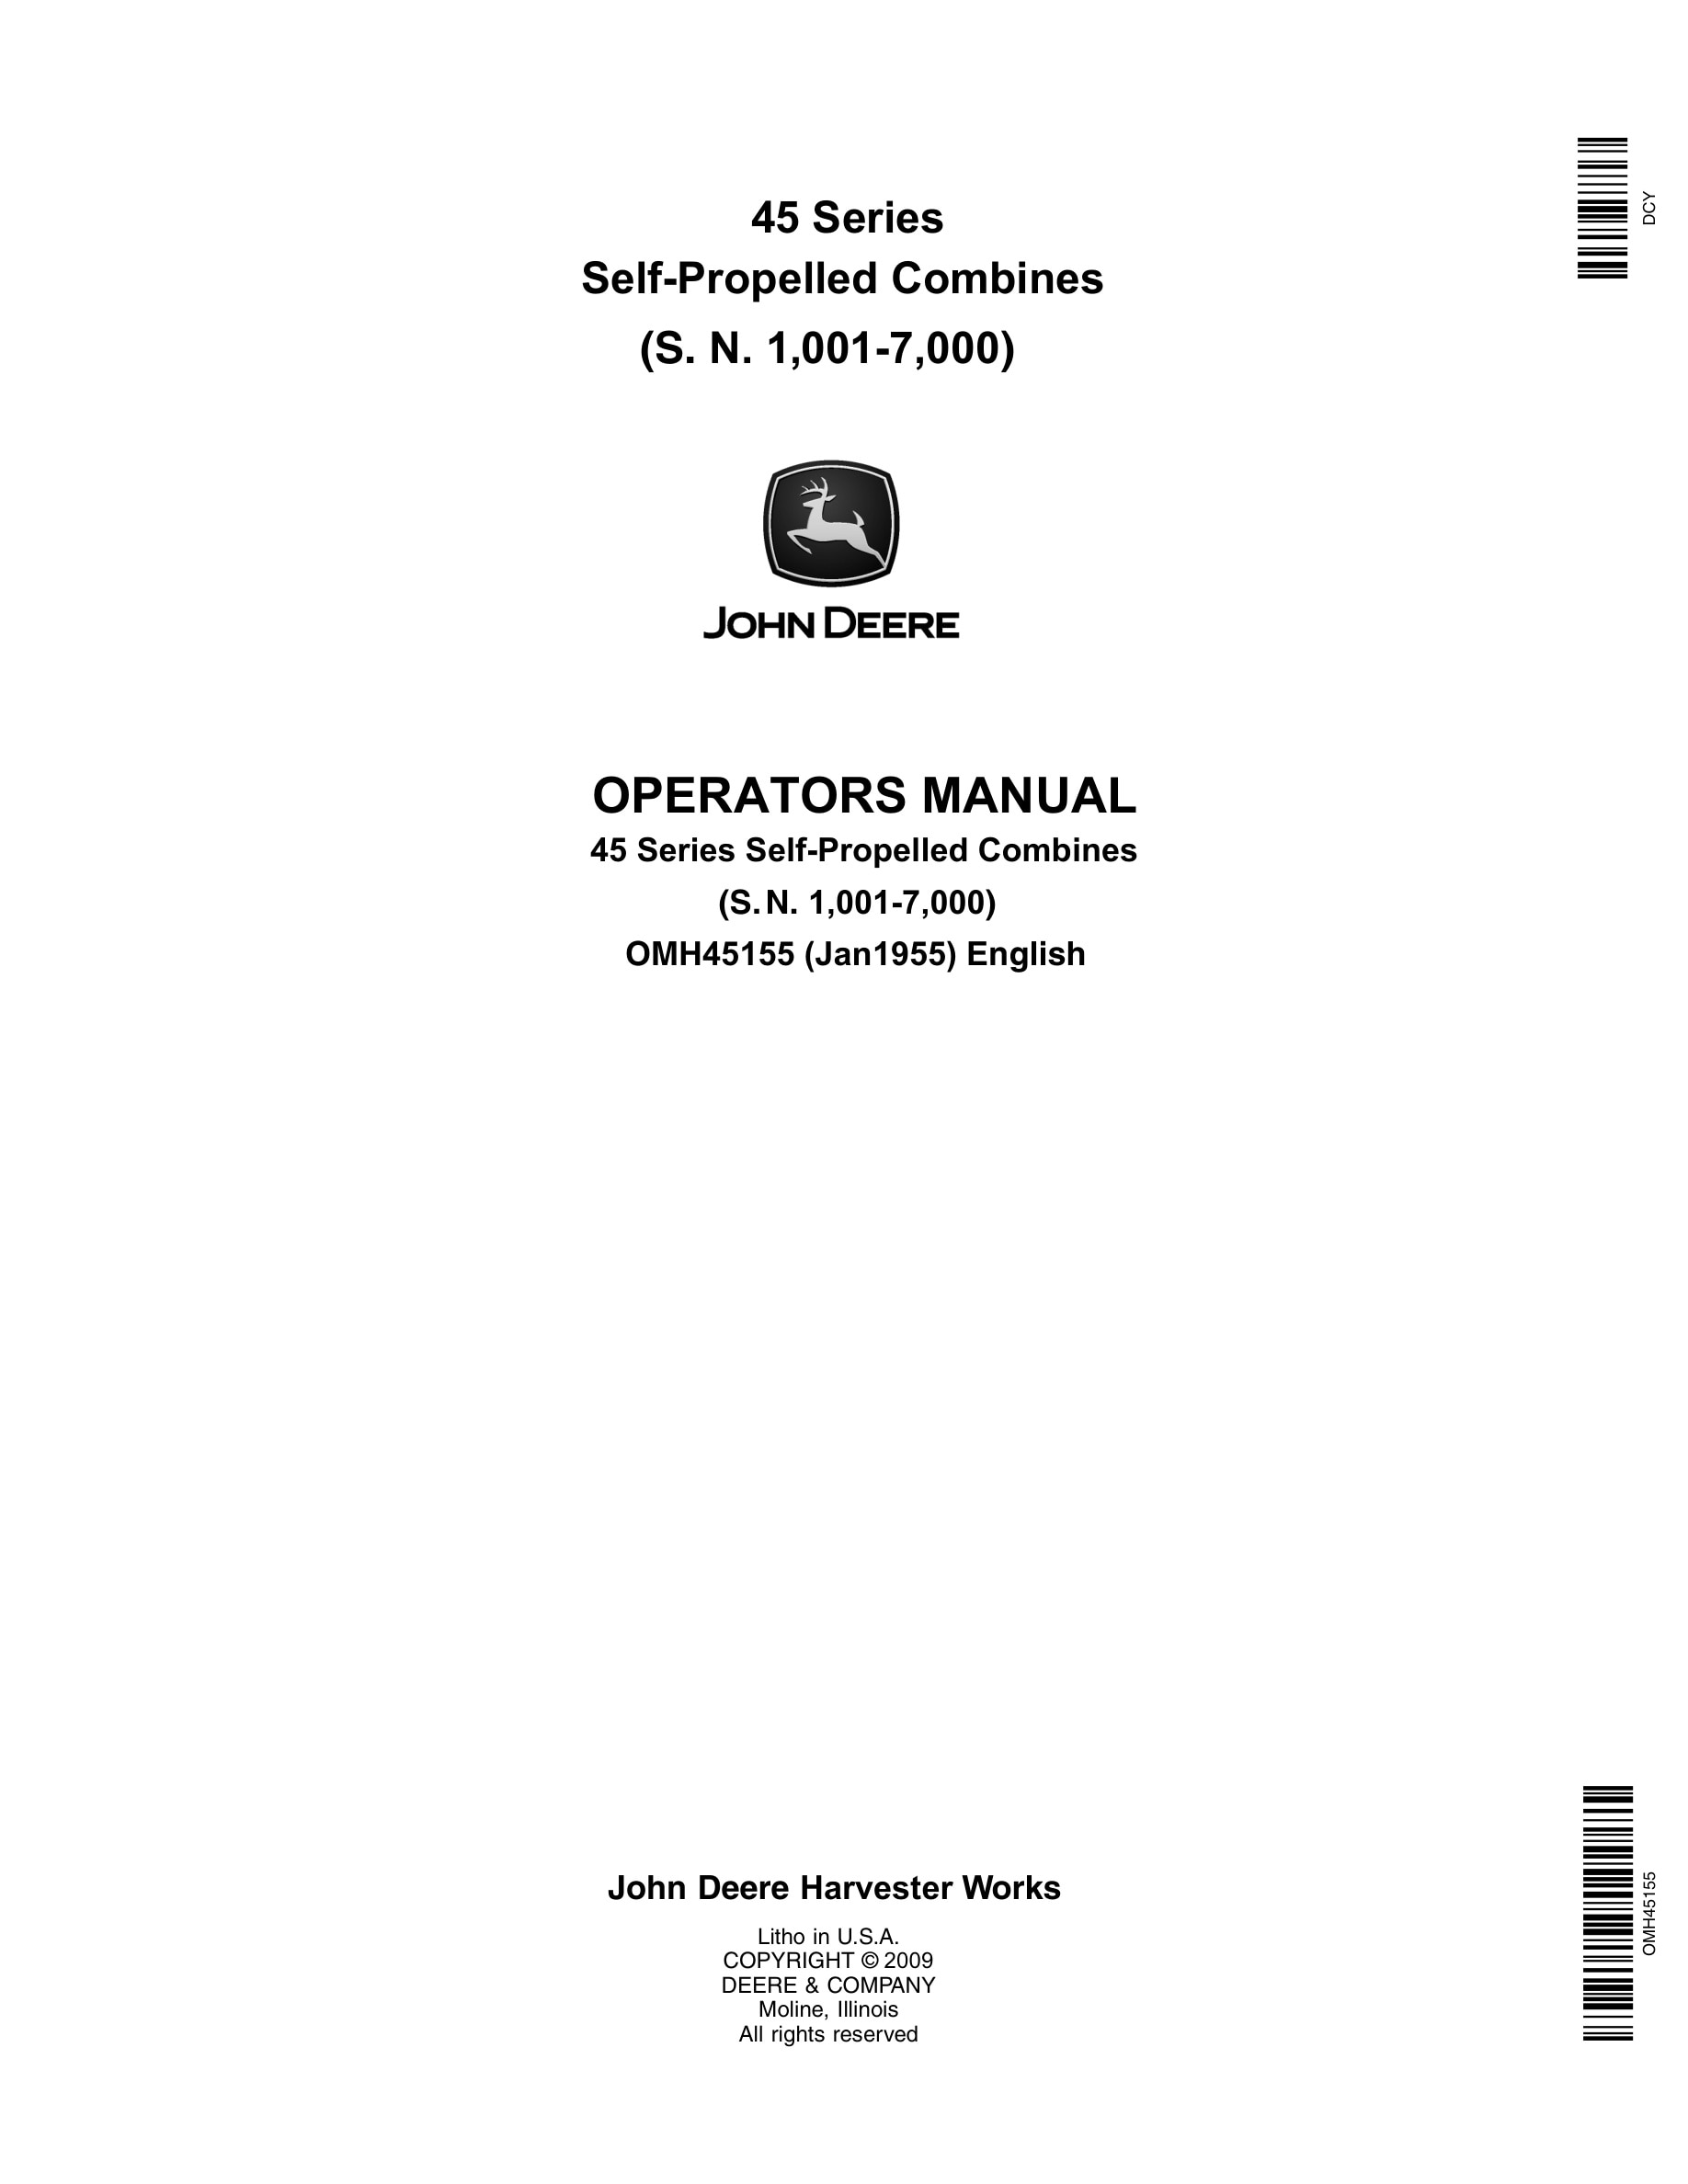 John Deere 45 Series Series Self-Propelled Combine Operator Manual OMH45155-1